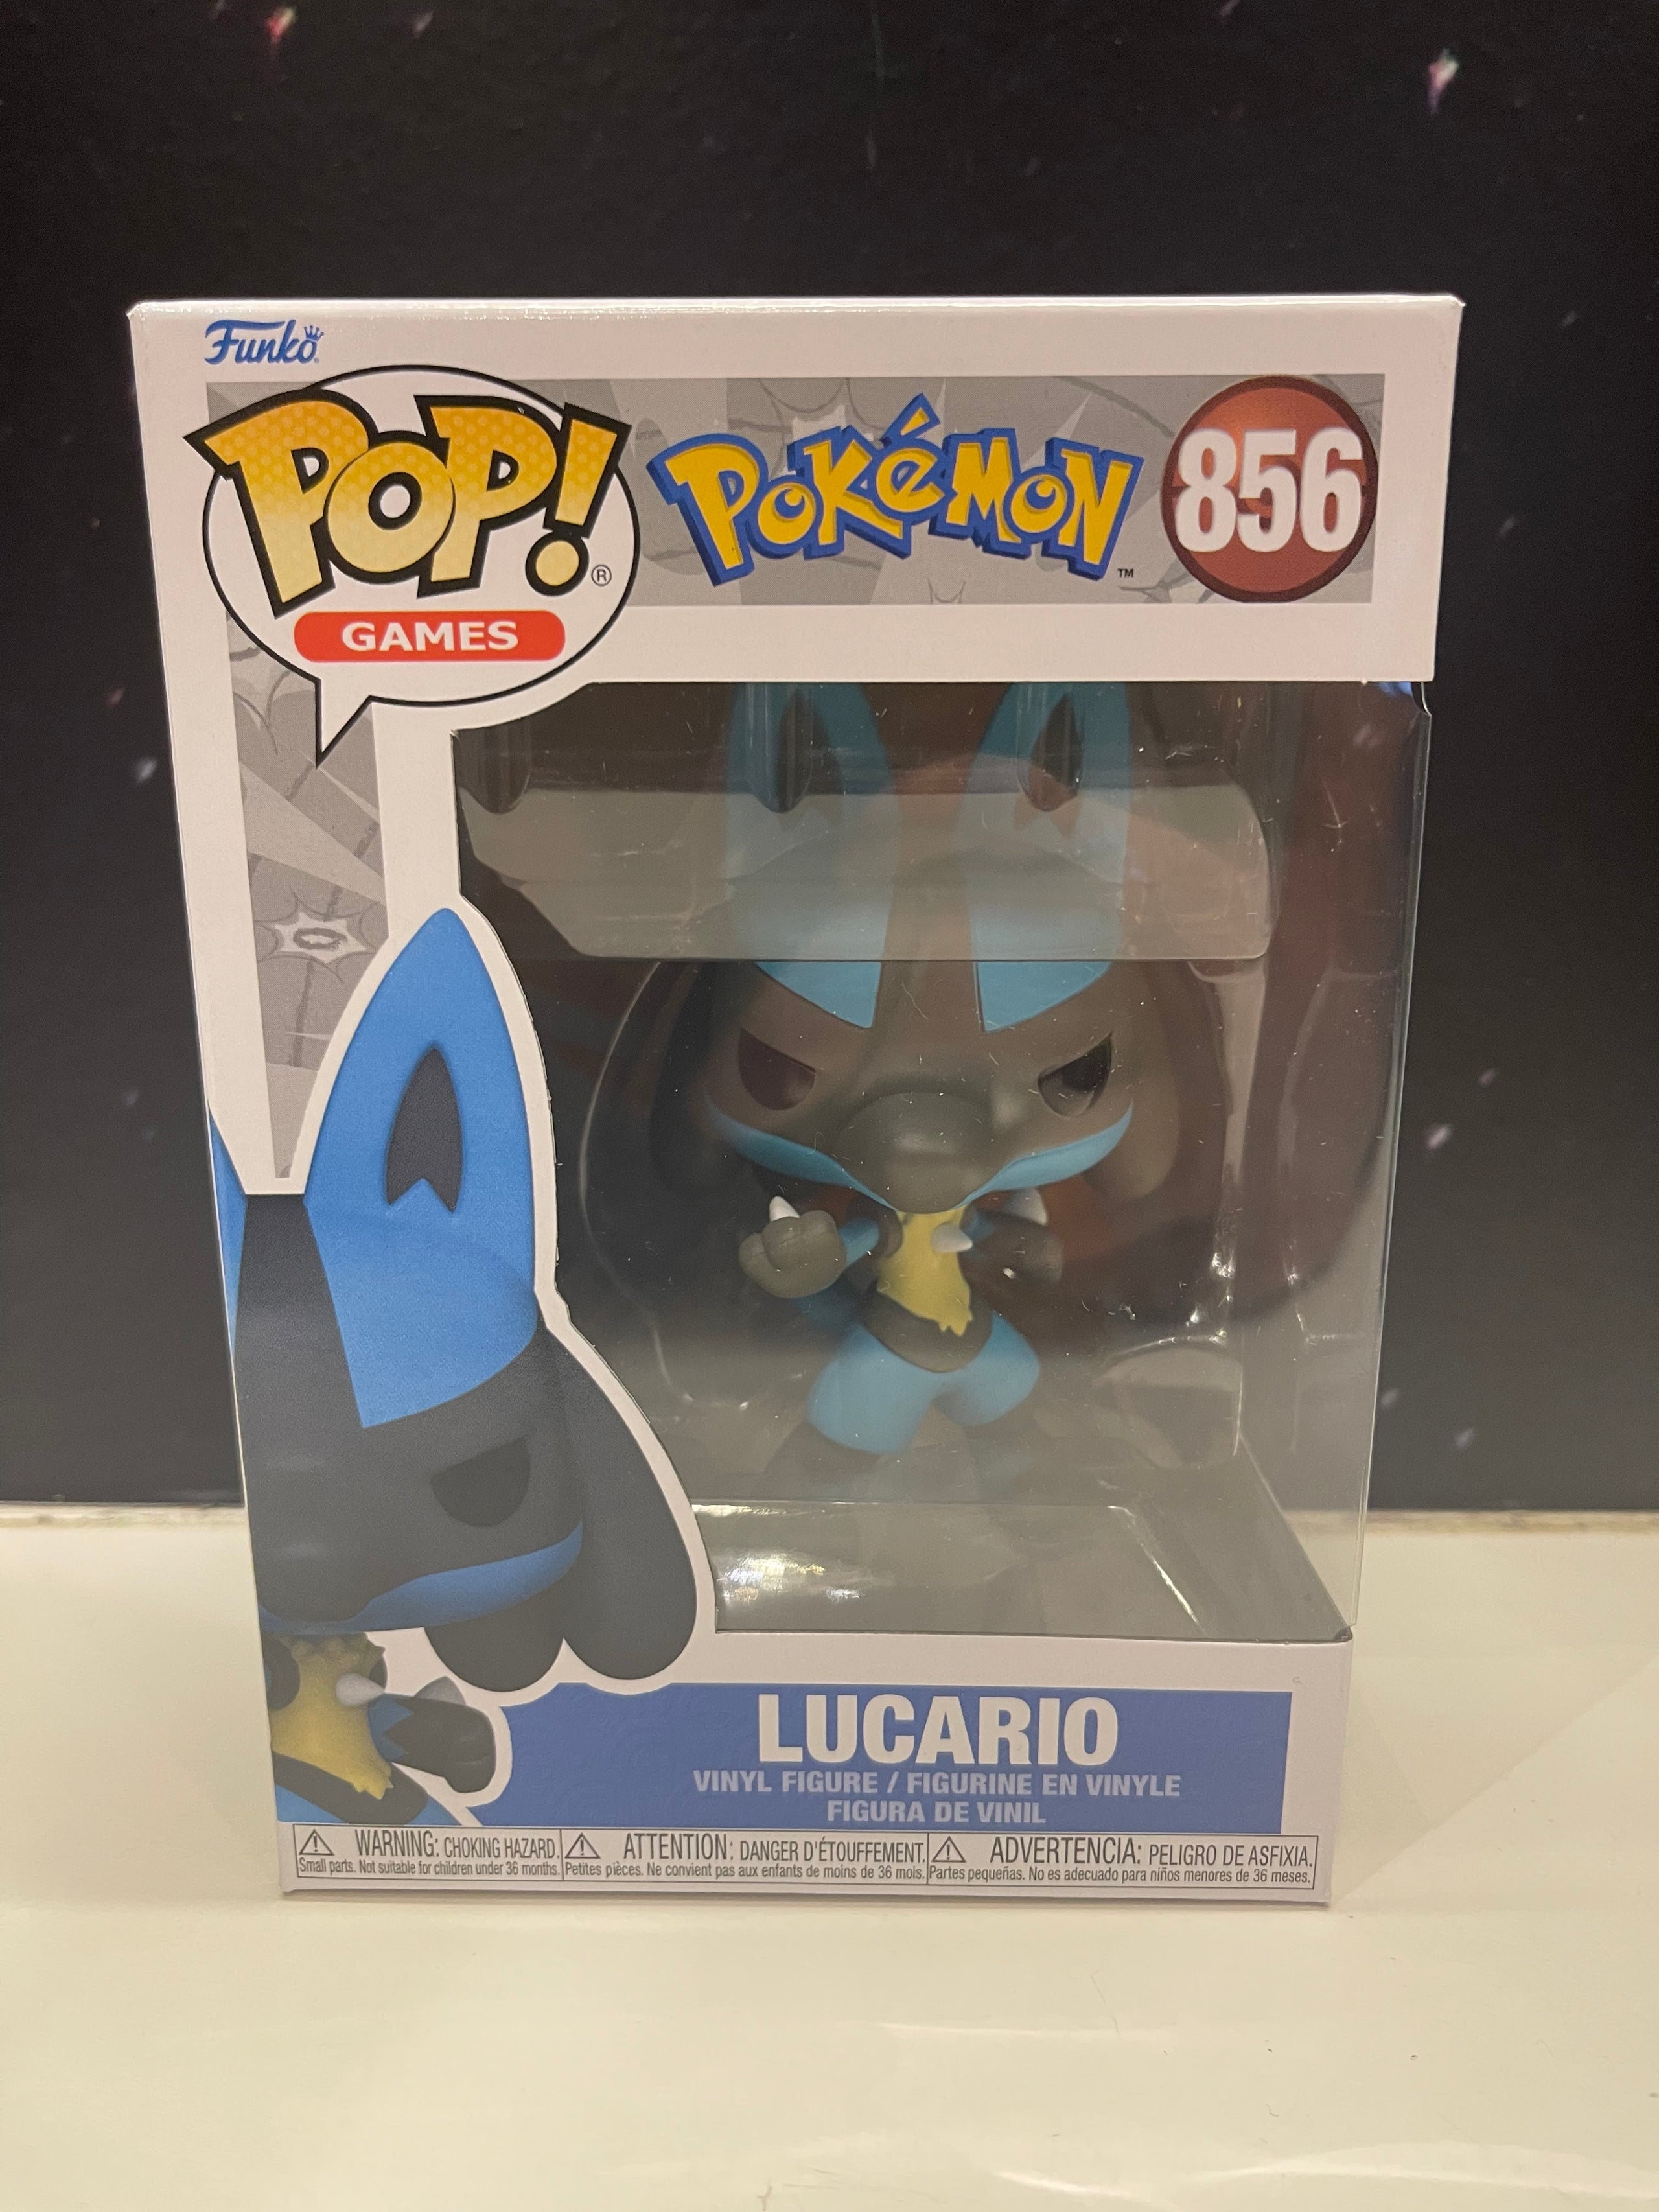 Lucario 856 - Pokémon Funko Pop! Vinyl Figure